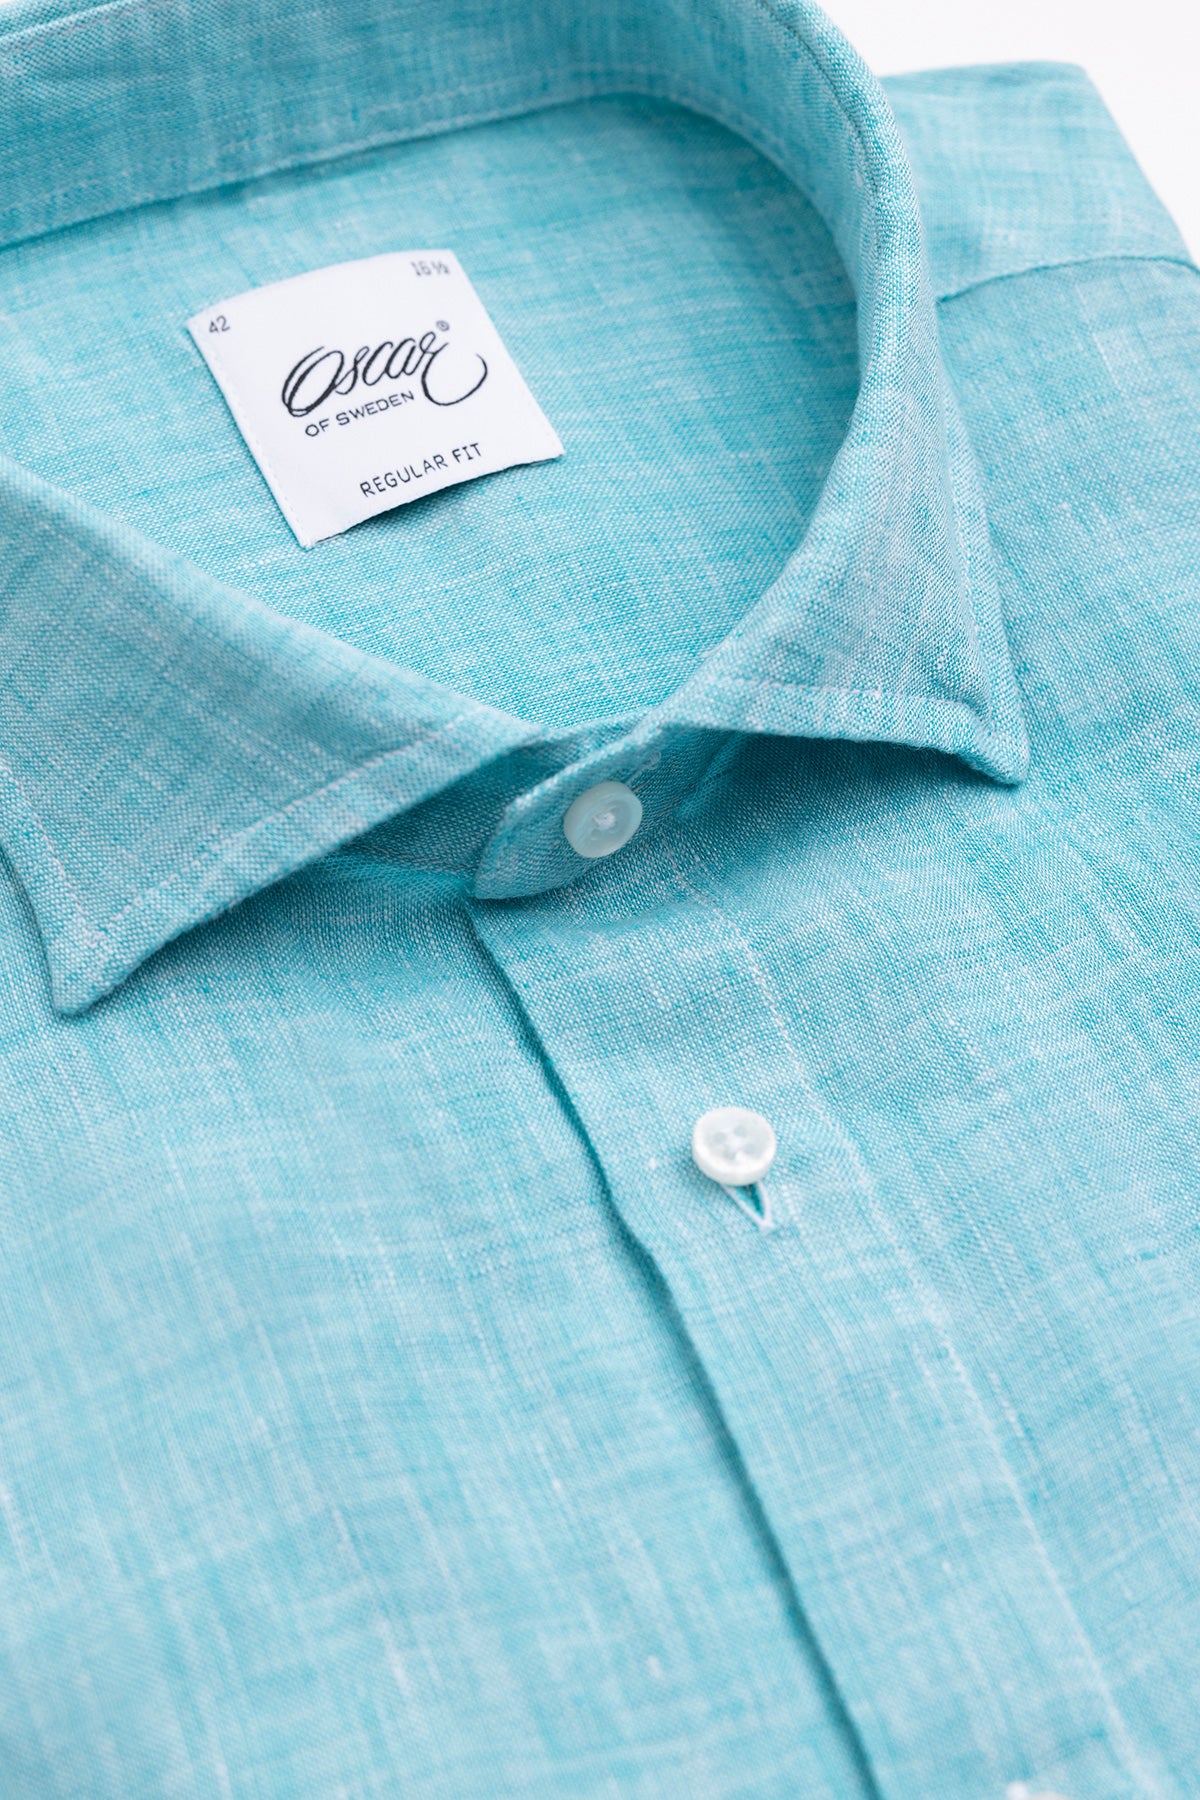 Turquoise short sleeve regular fit linen shirt